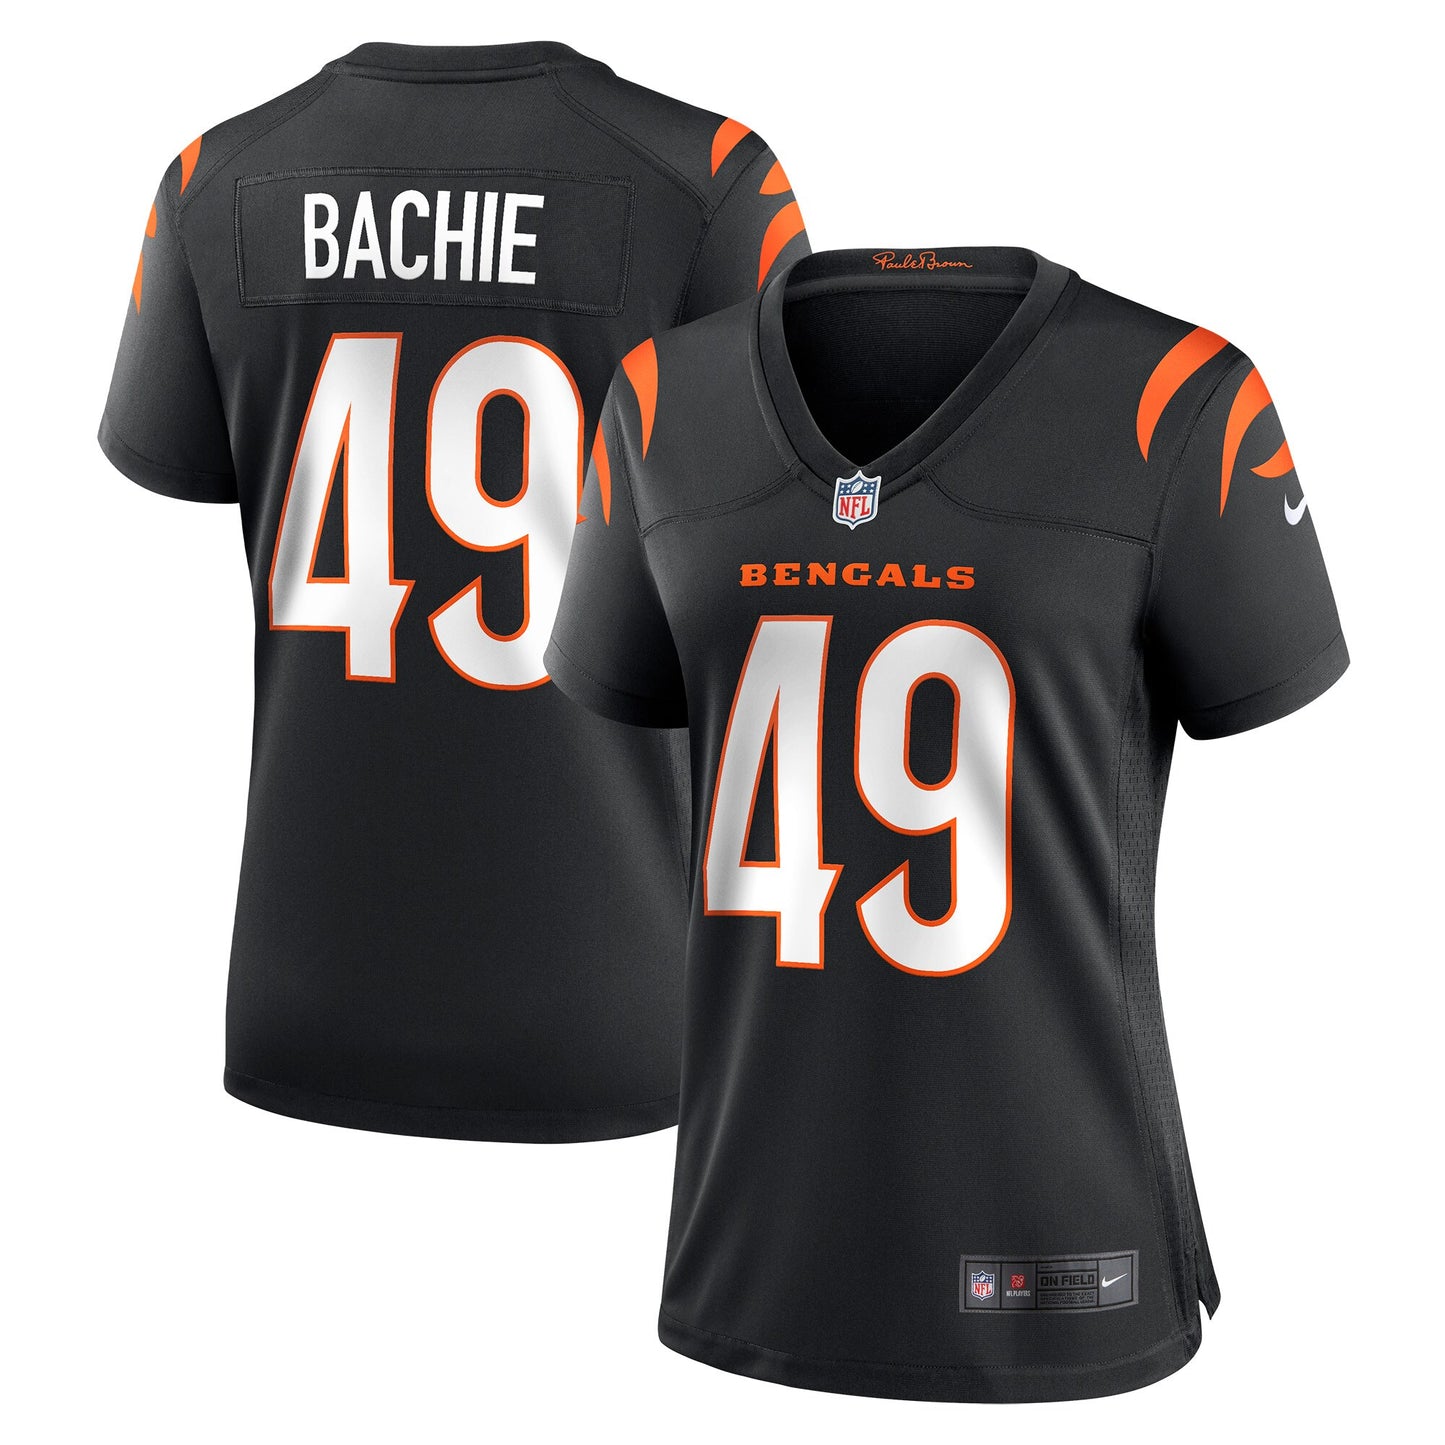 Joe Bachie Cincinnati Bengals Nike Women's Game Jersey - Black